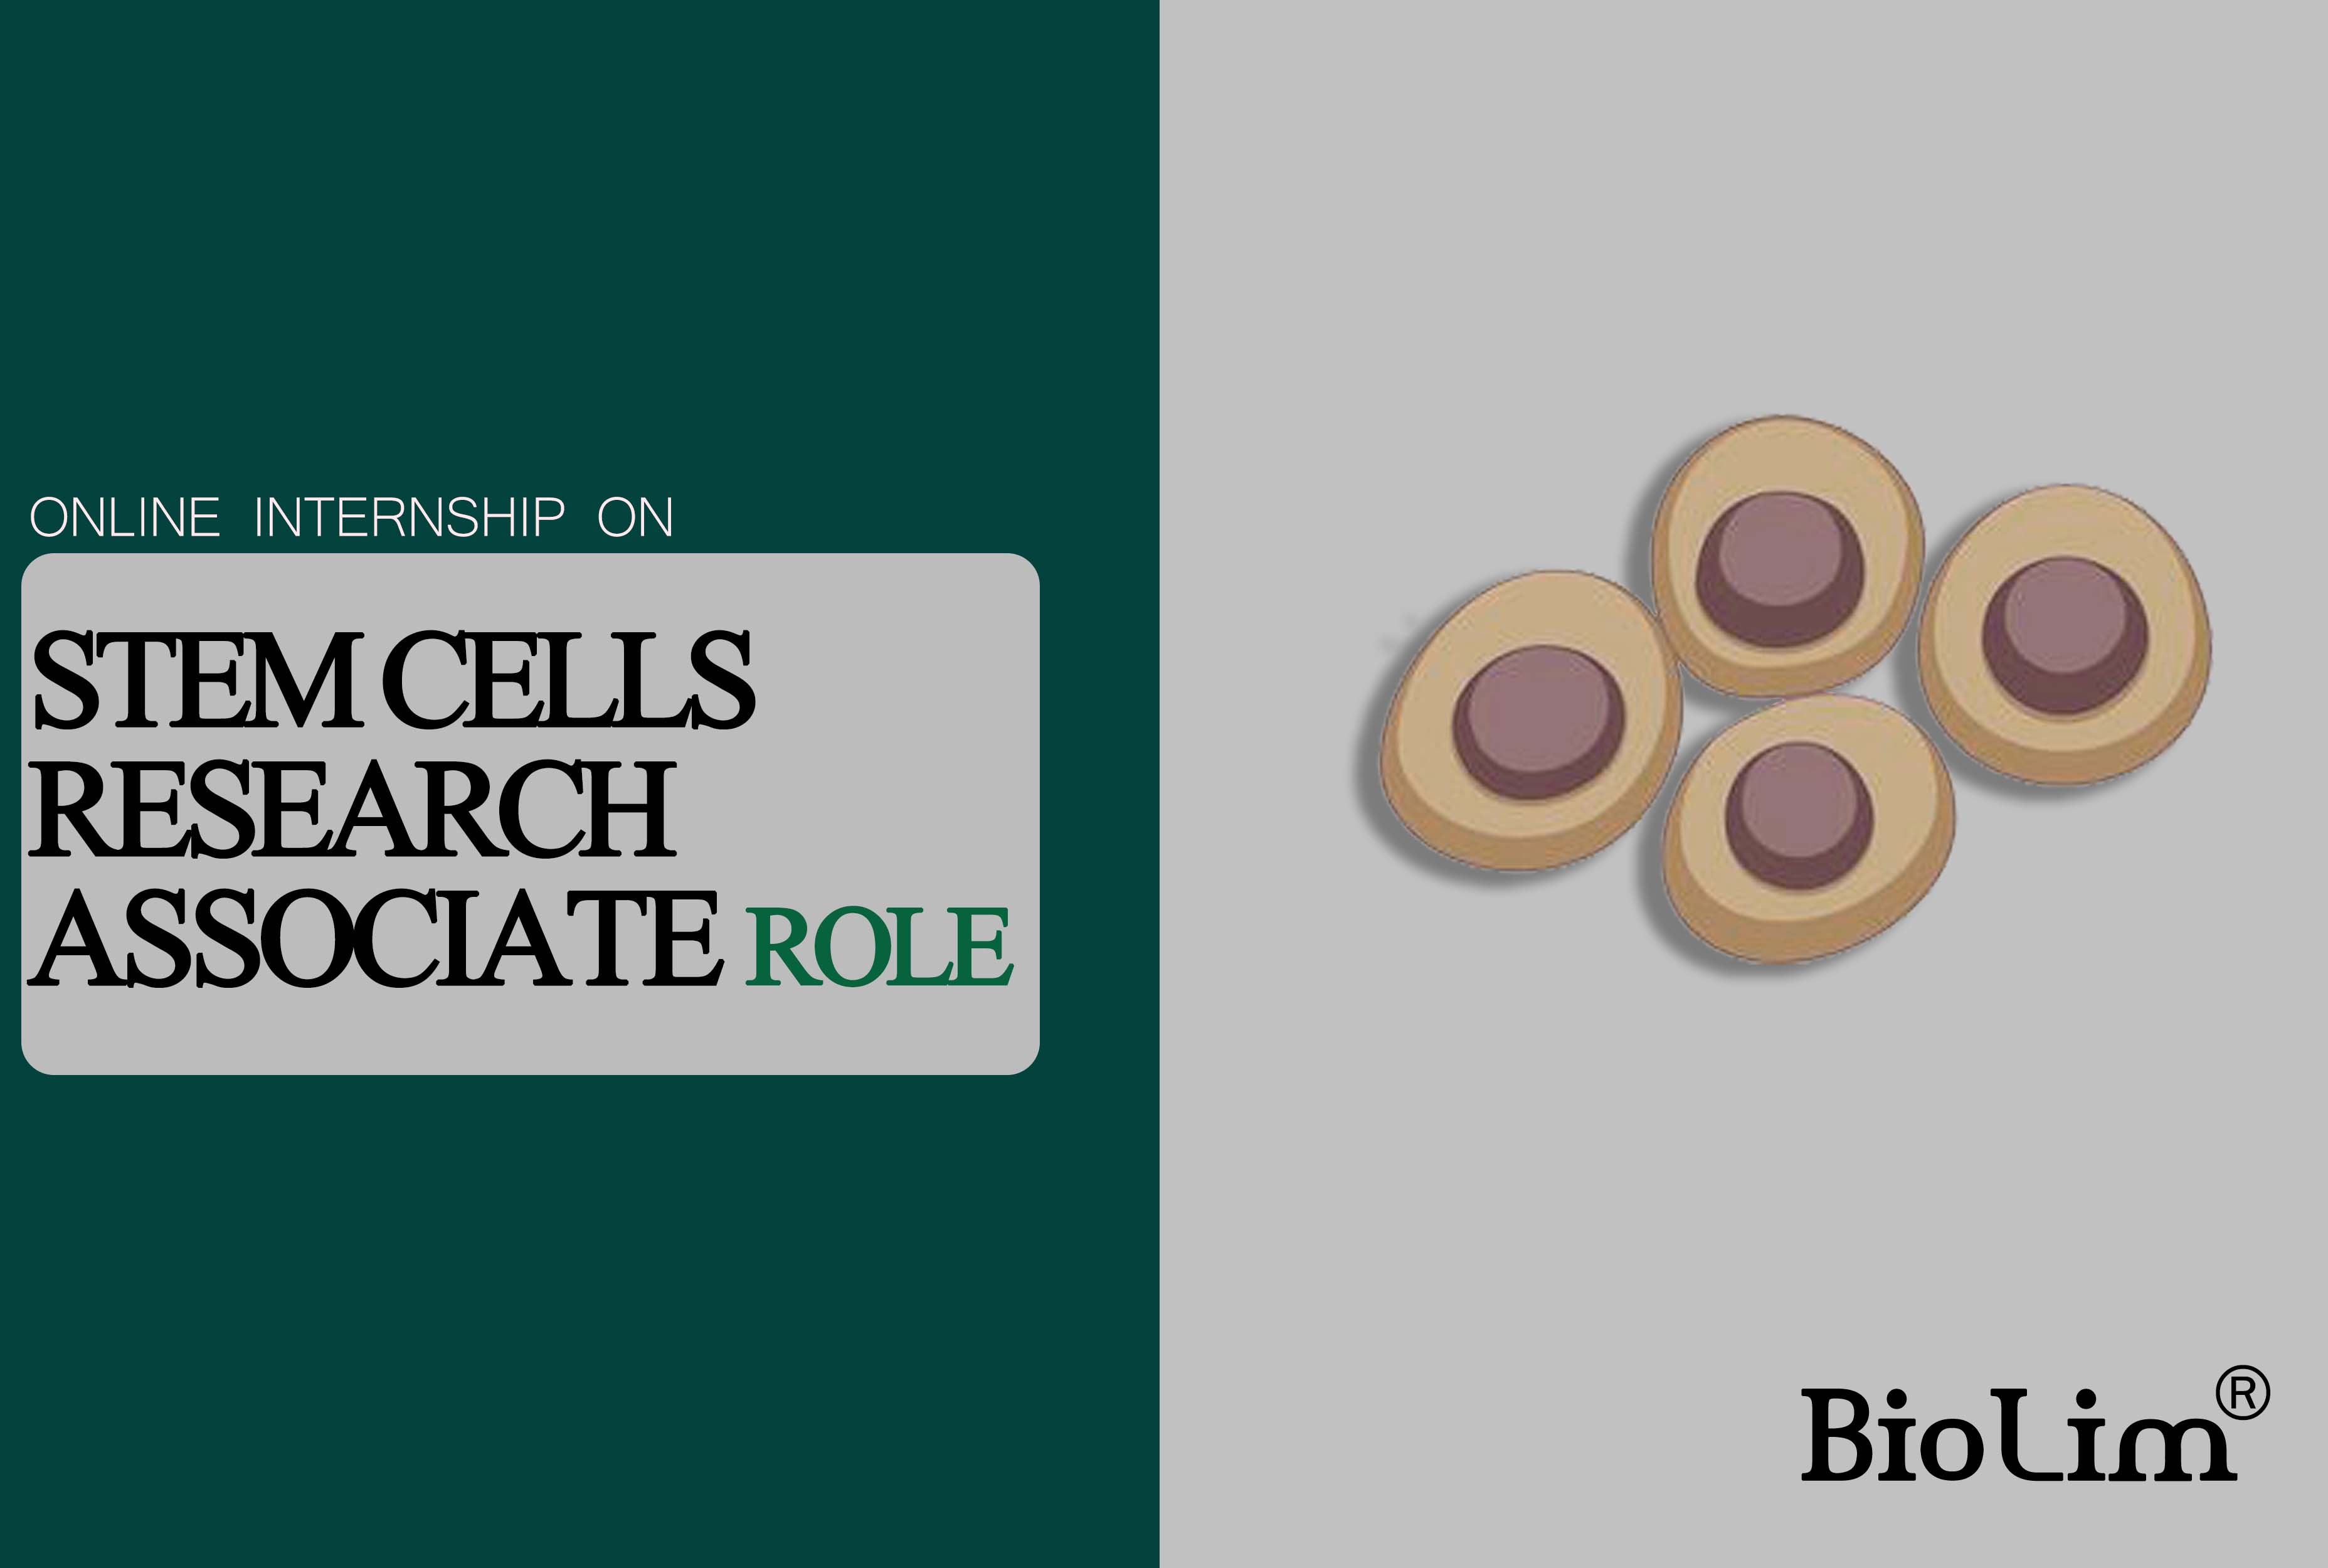 Internship on stem cells research associate role